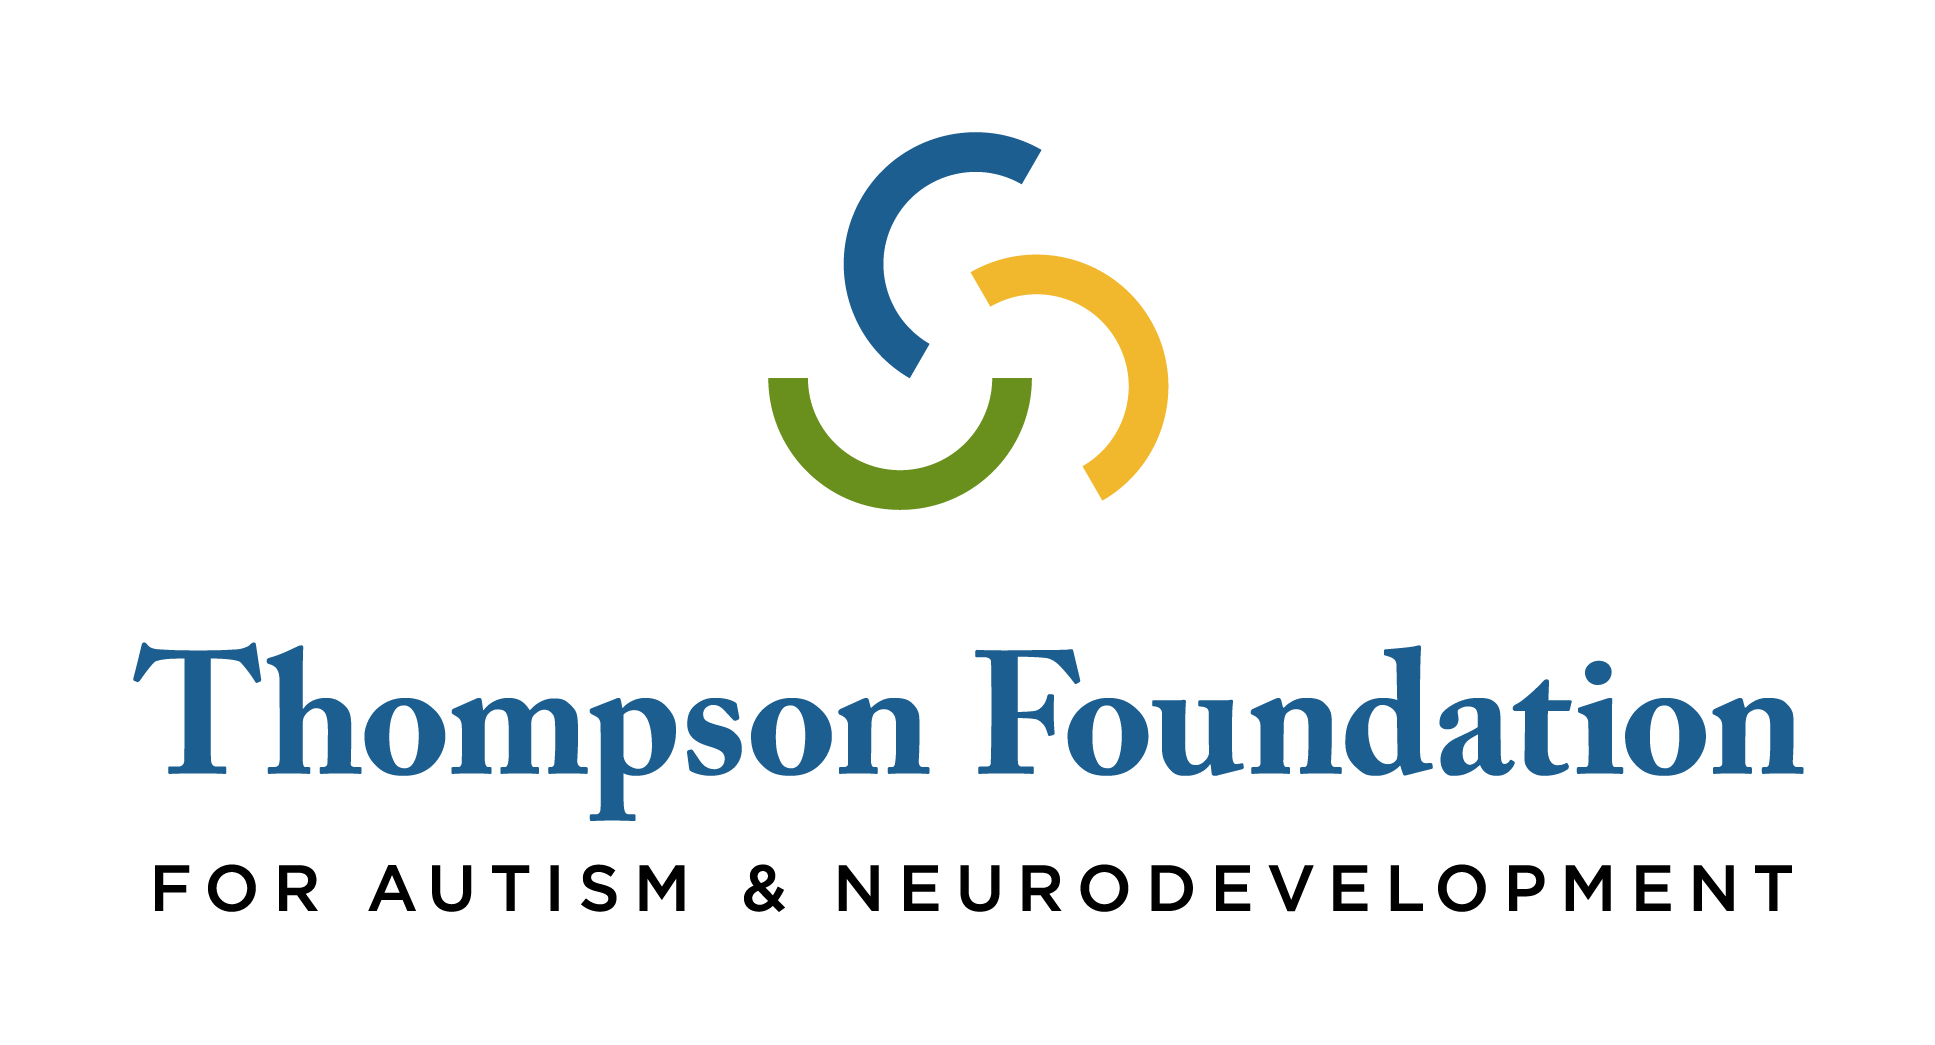 Thompson Foundation for Autism & Neurodevelopment